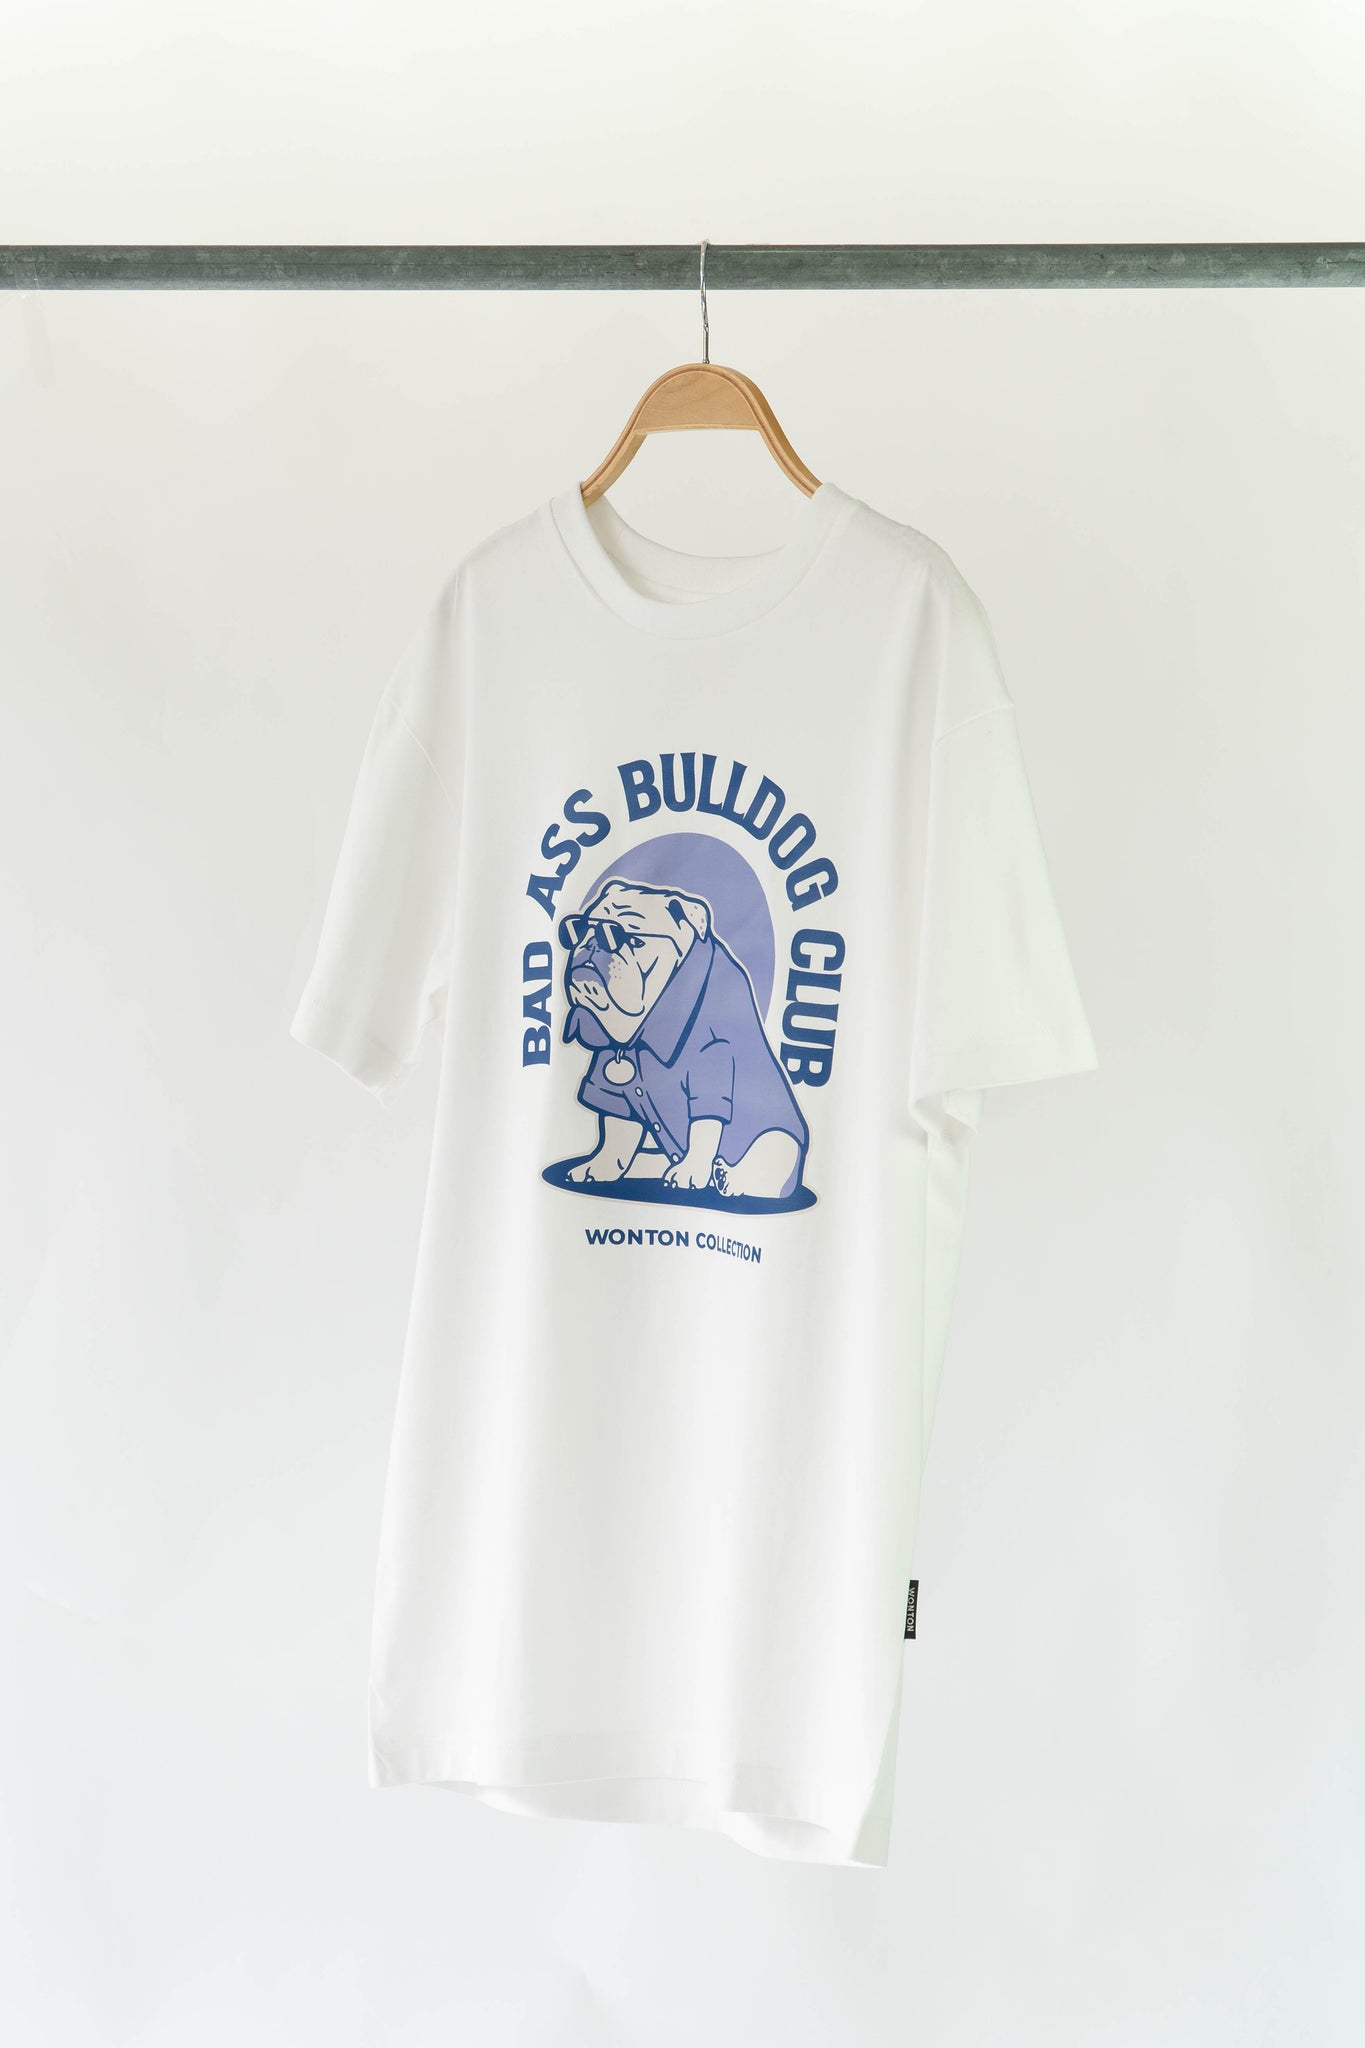 WONTON BAD ASS BULLDOG CLUB human t-shirt in white and blue